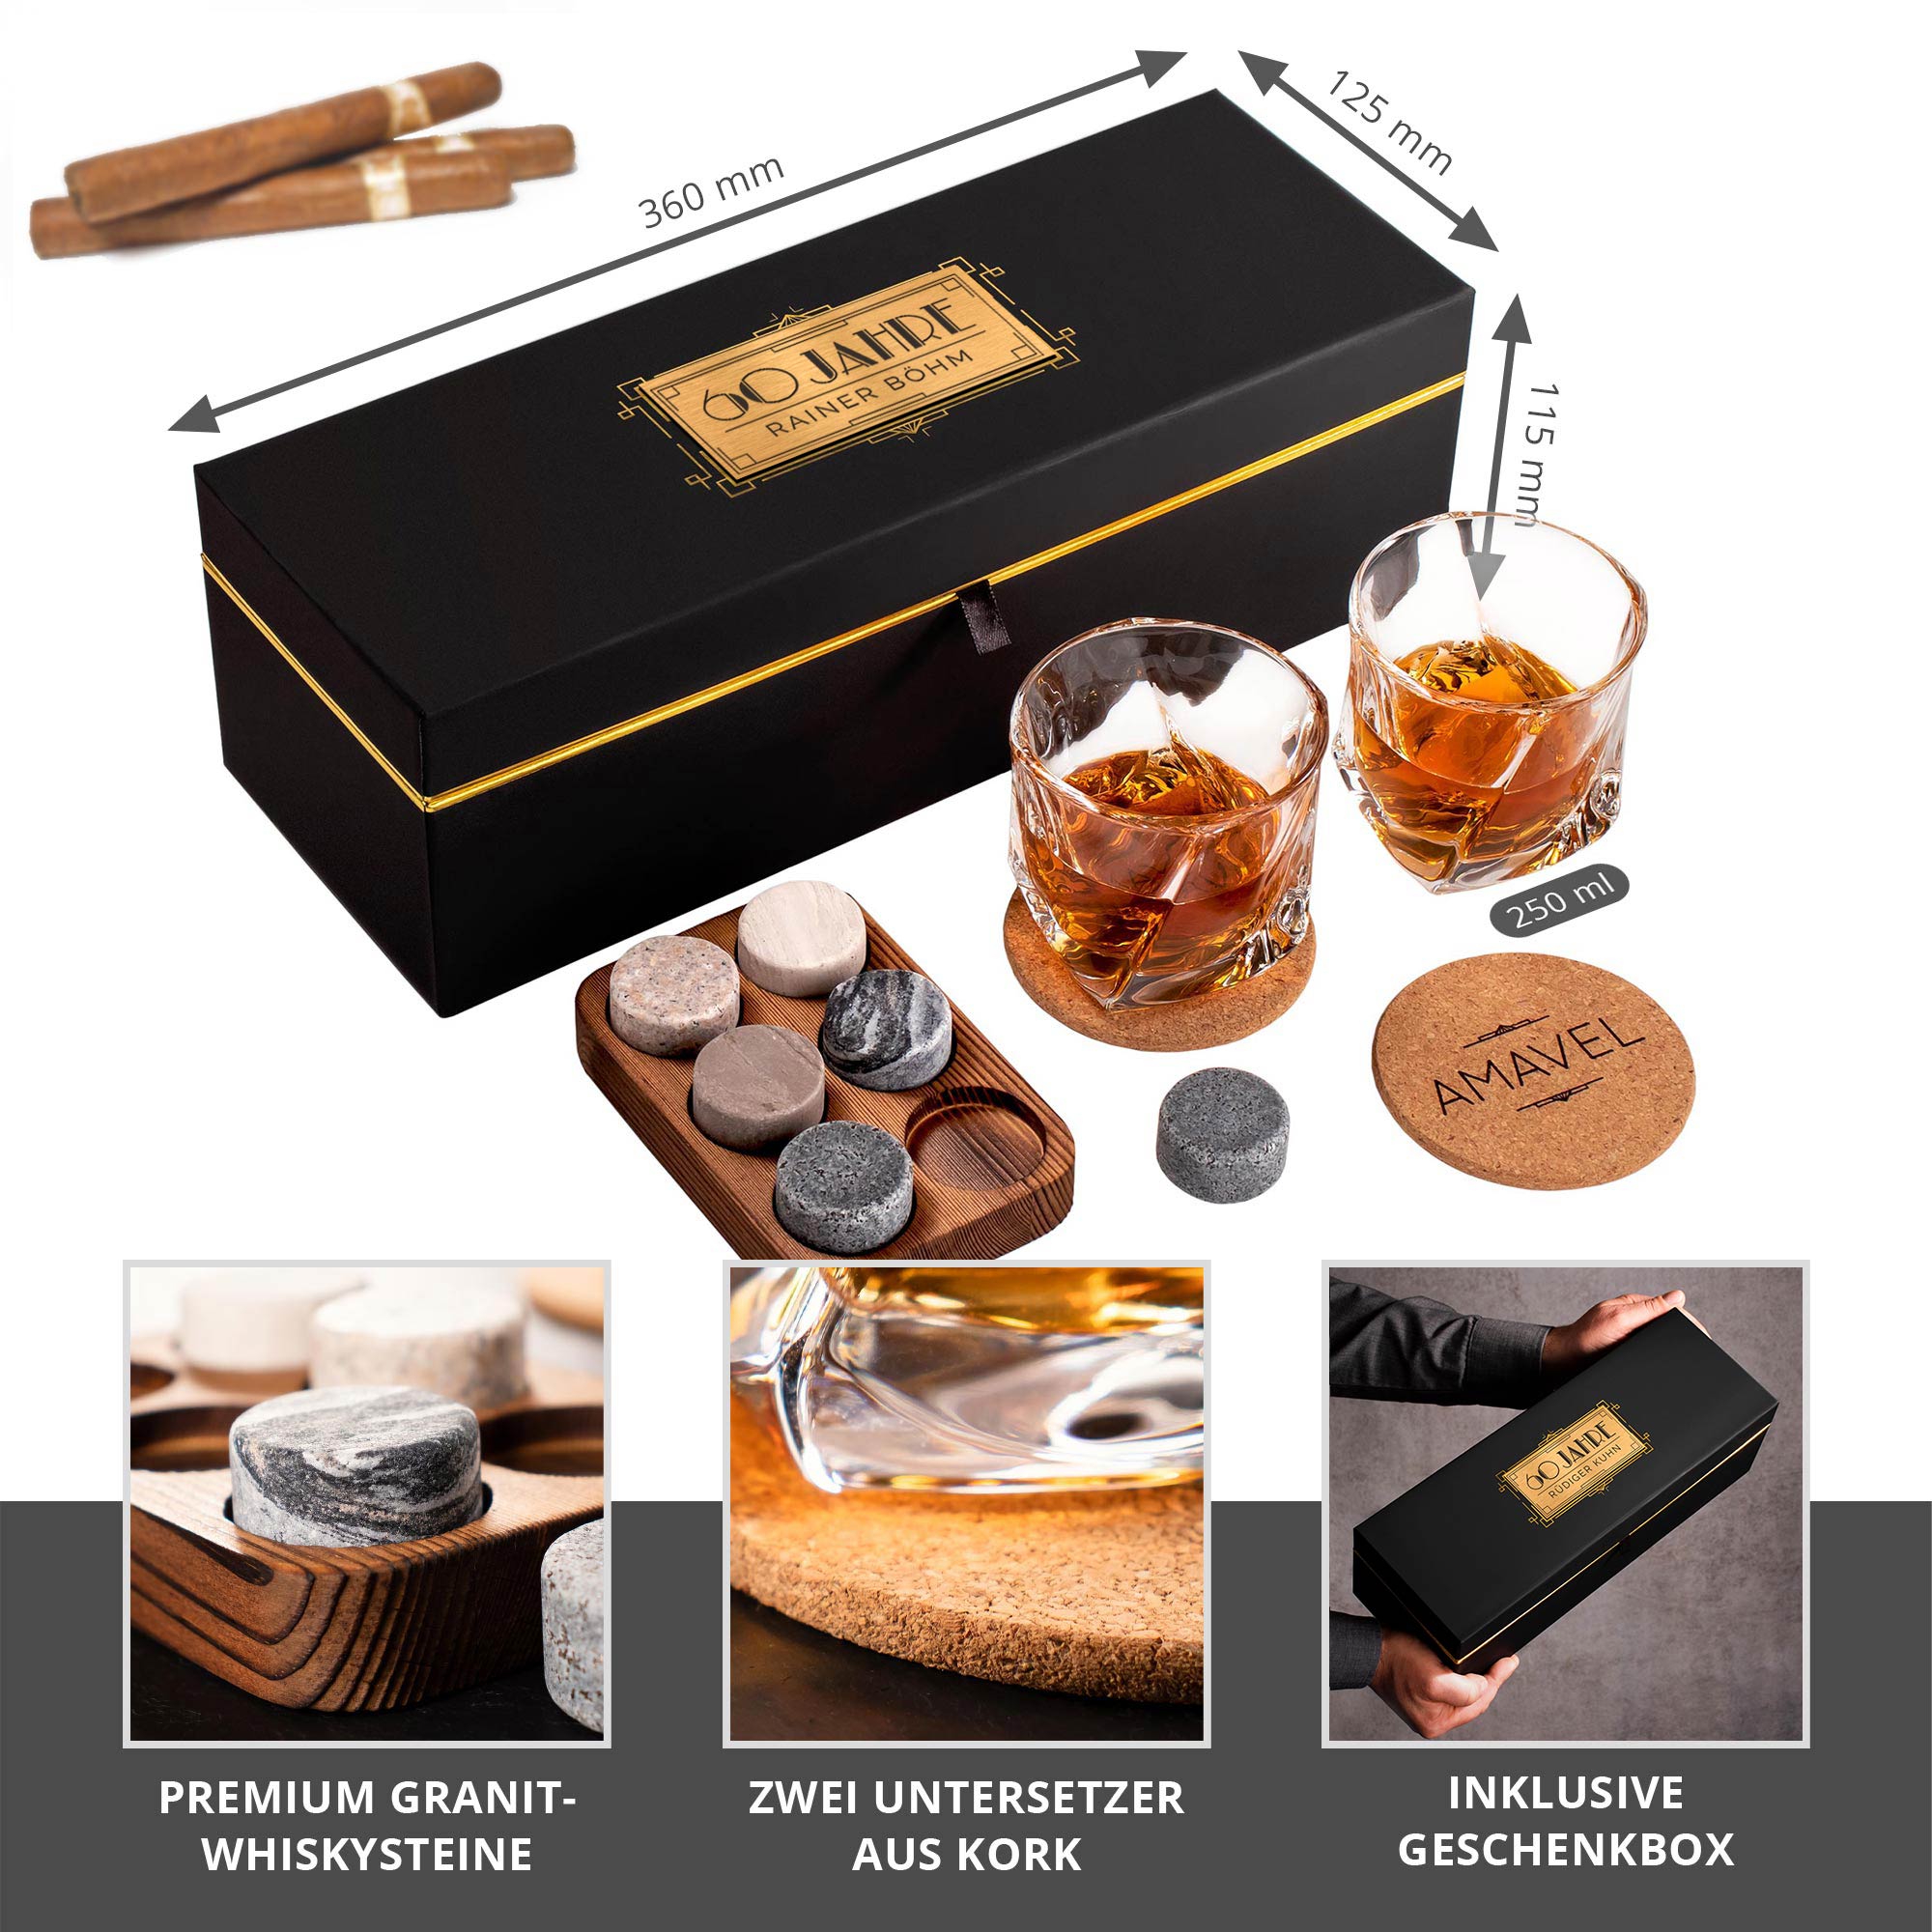 Whisky Set in edler Geschenkbox zum 60. Geburtstag 0021-0002-DE-0006 - 1